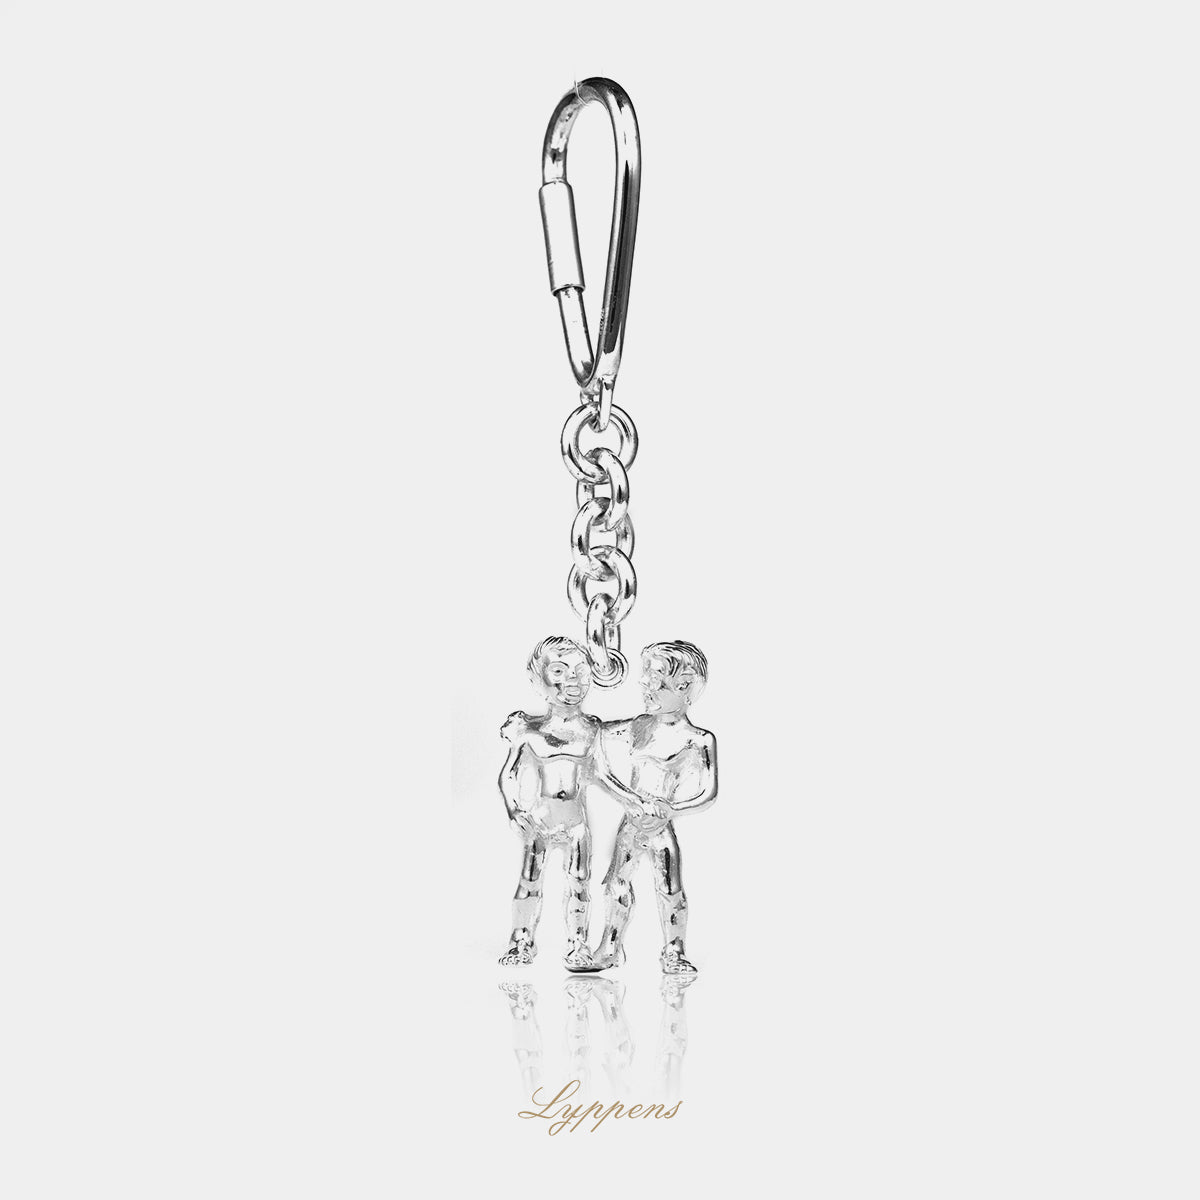 Silver "Gemini" constellation key chain